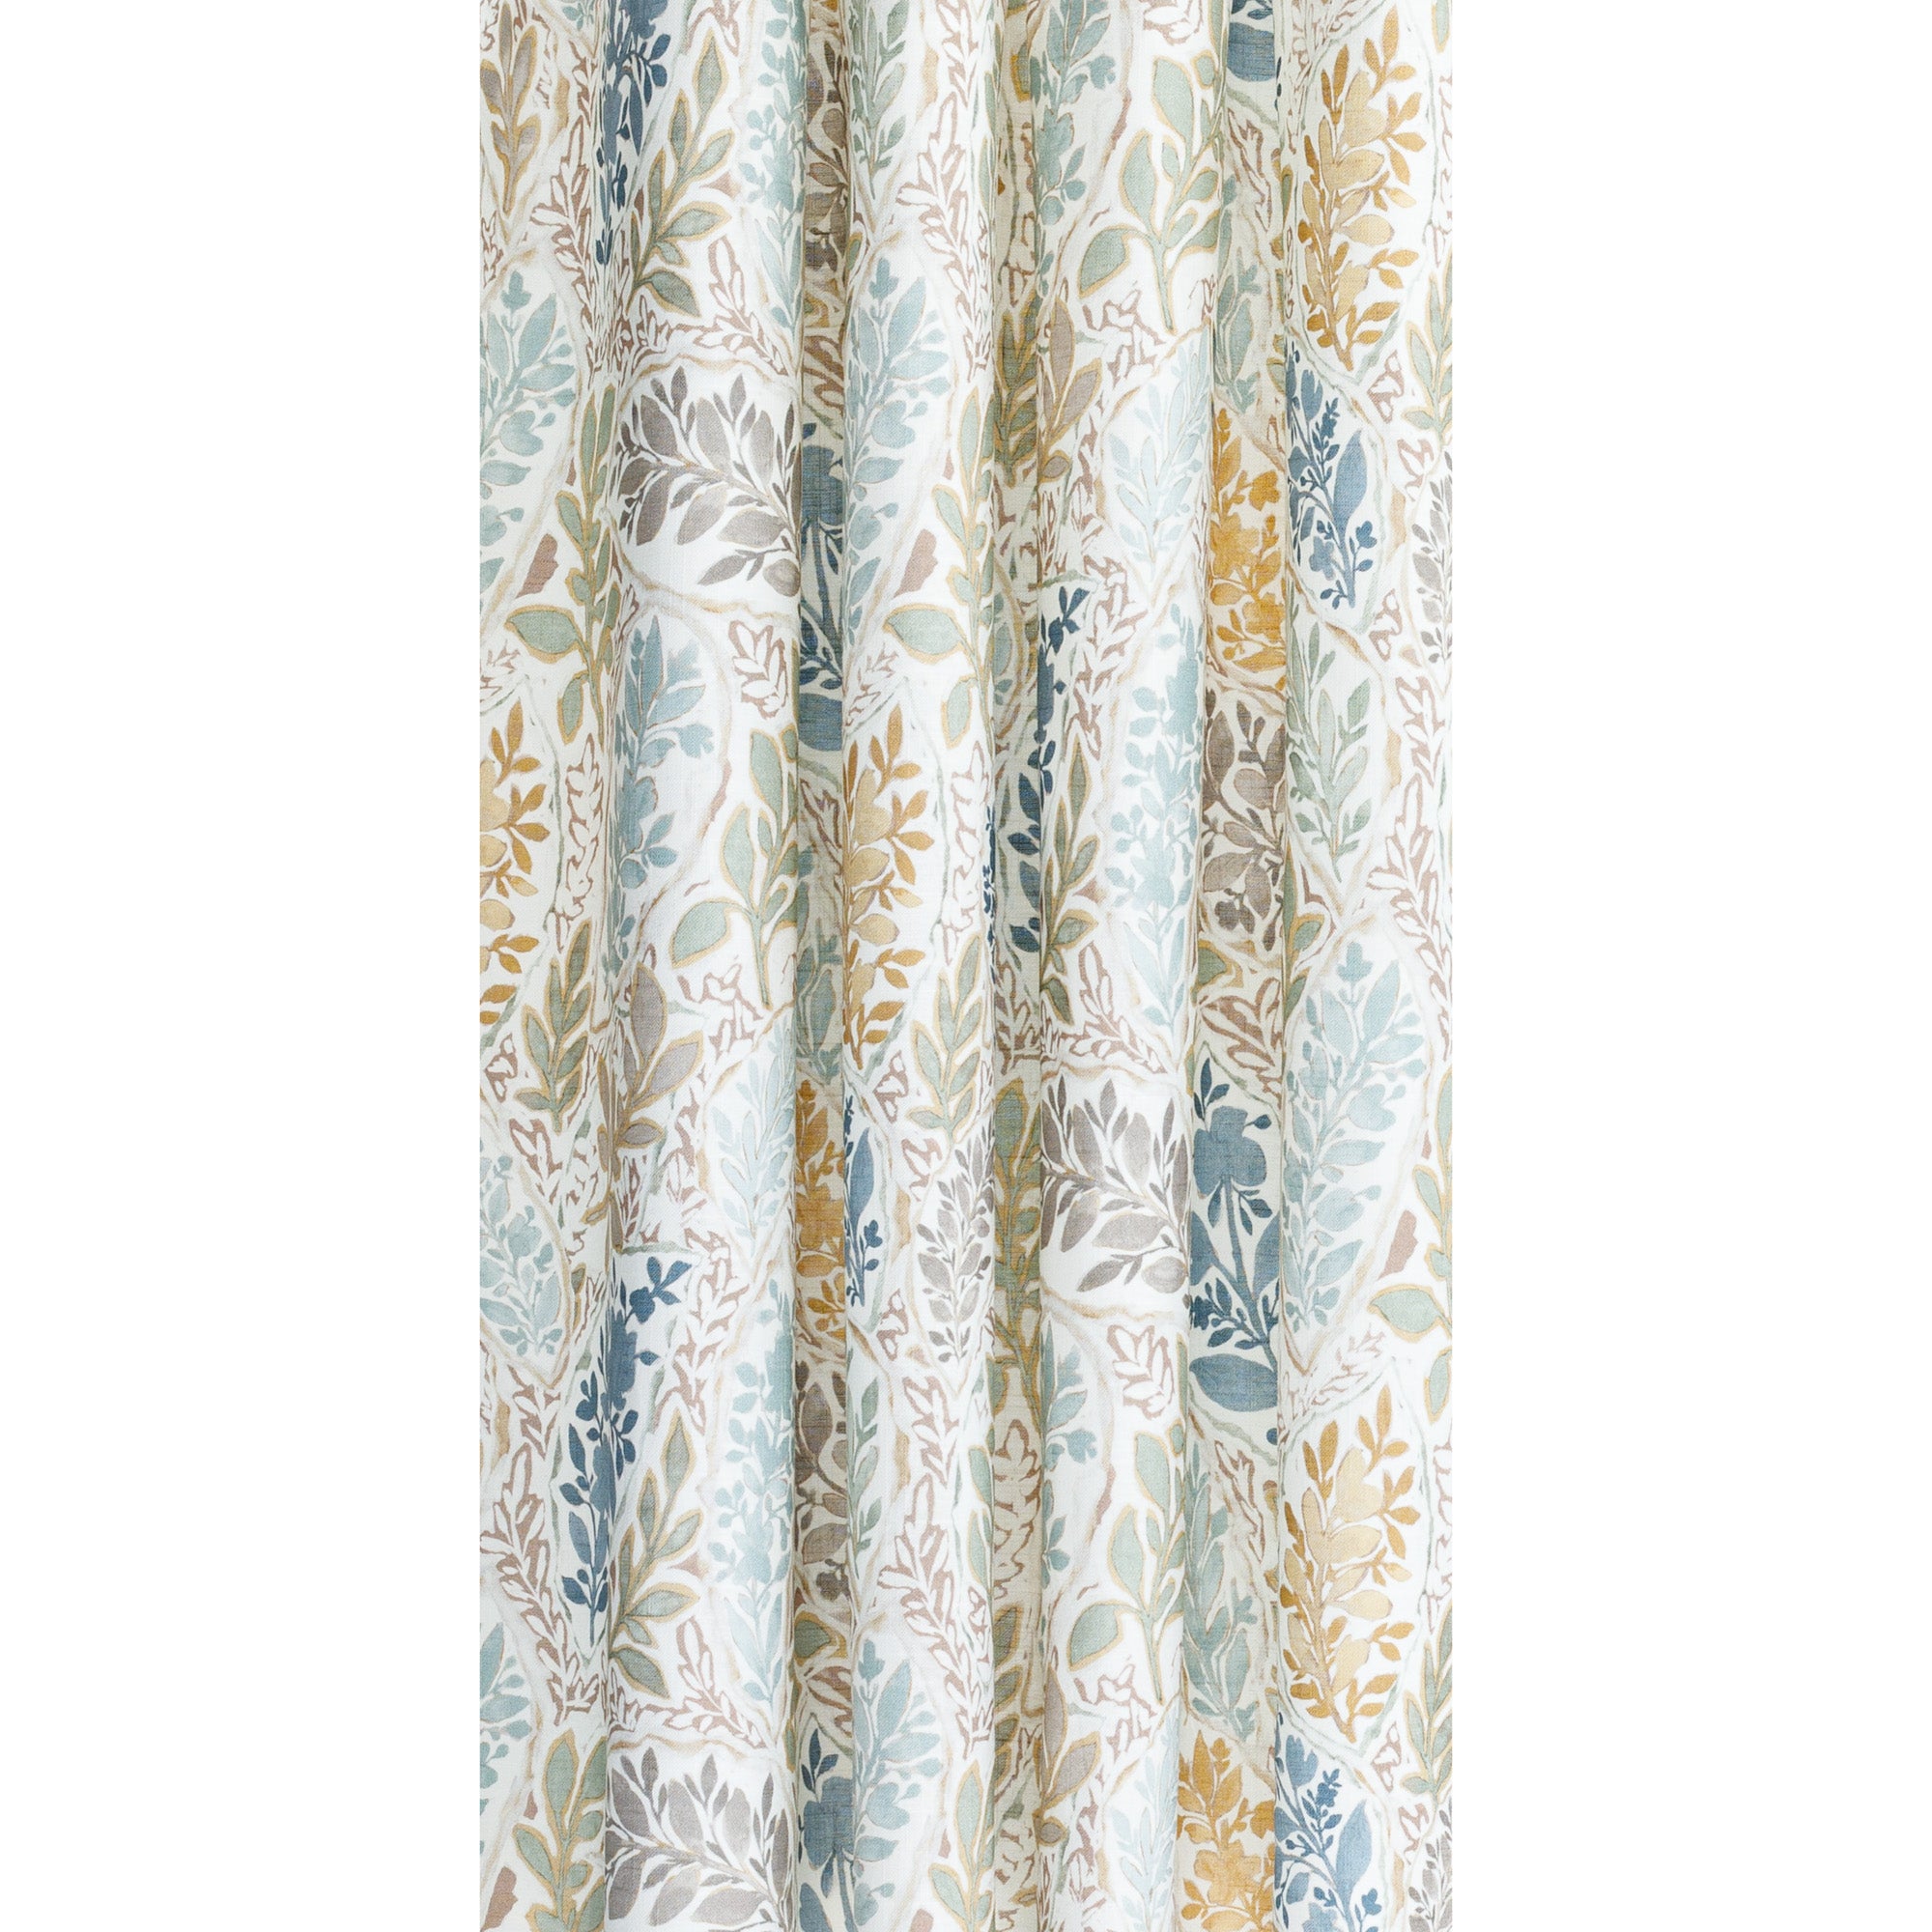 an aqua, sage, marigold, mauve and stone blue watery floral print drapery fabric